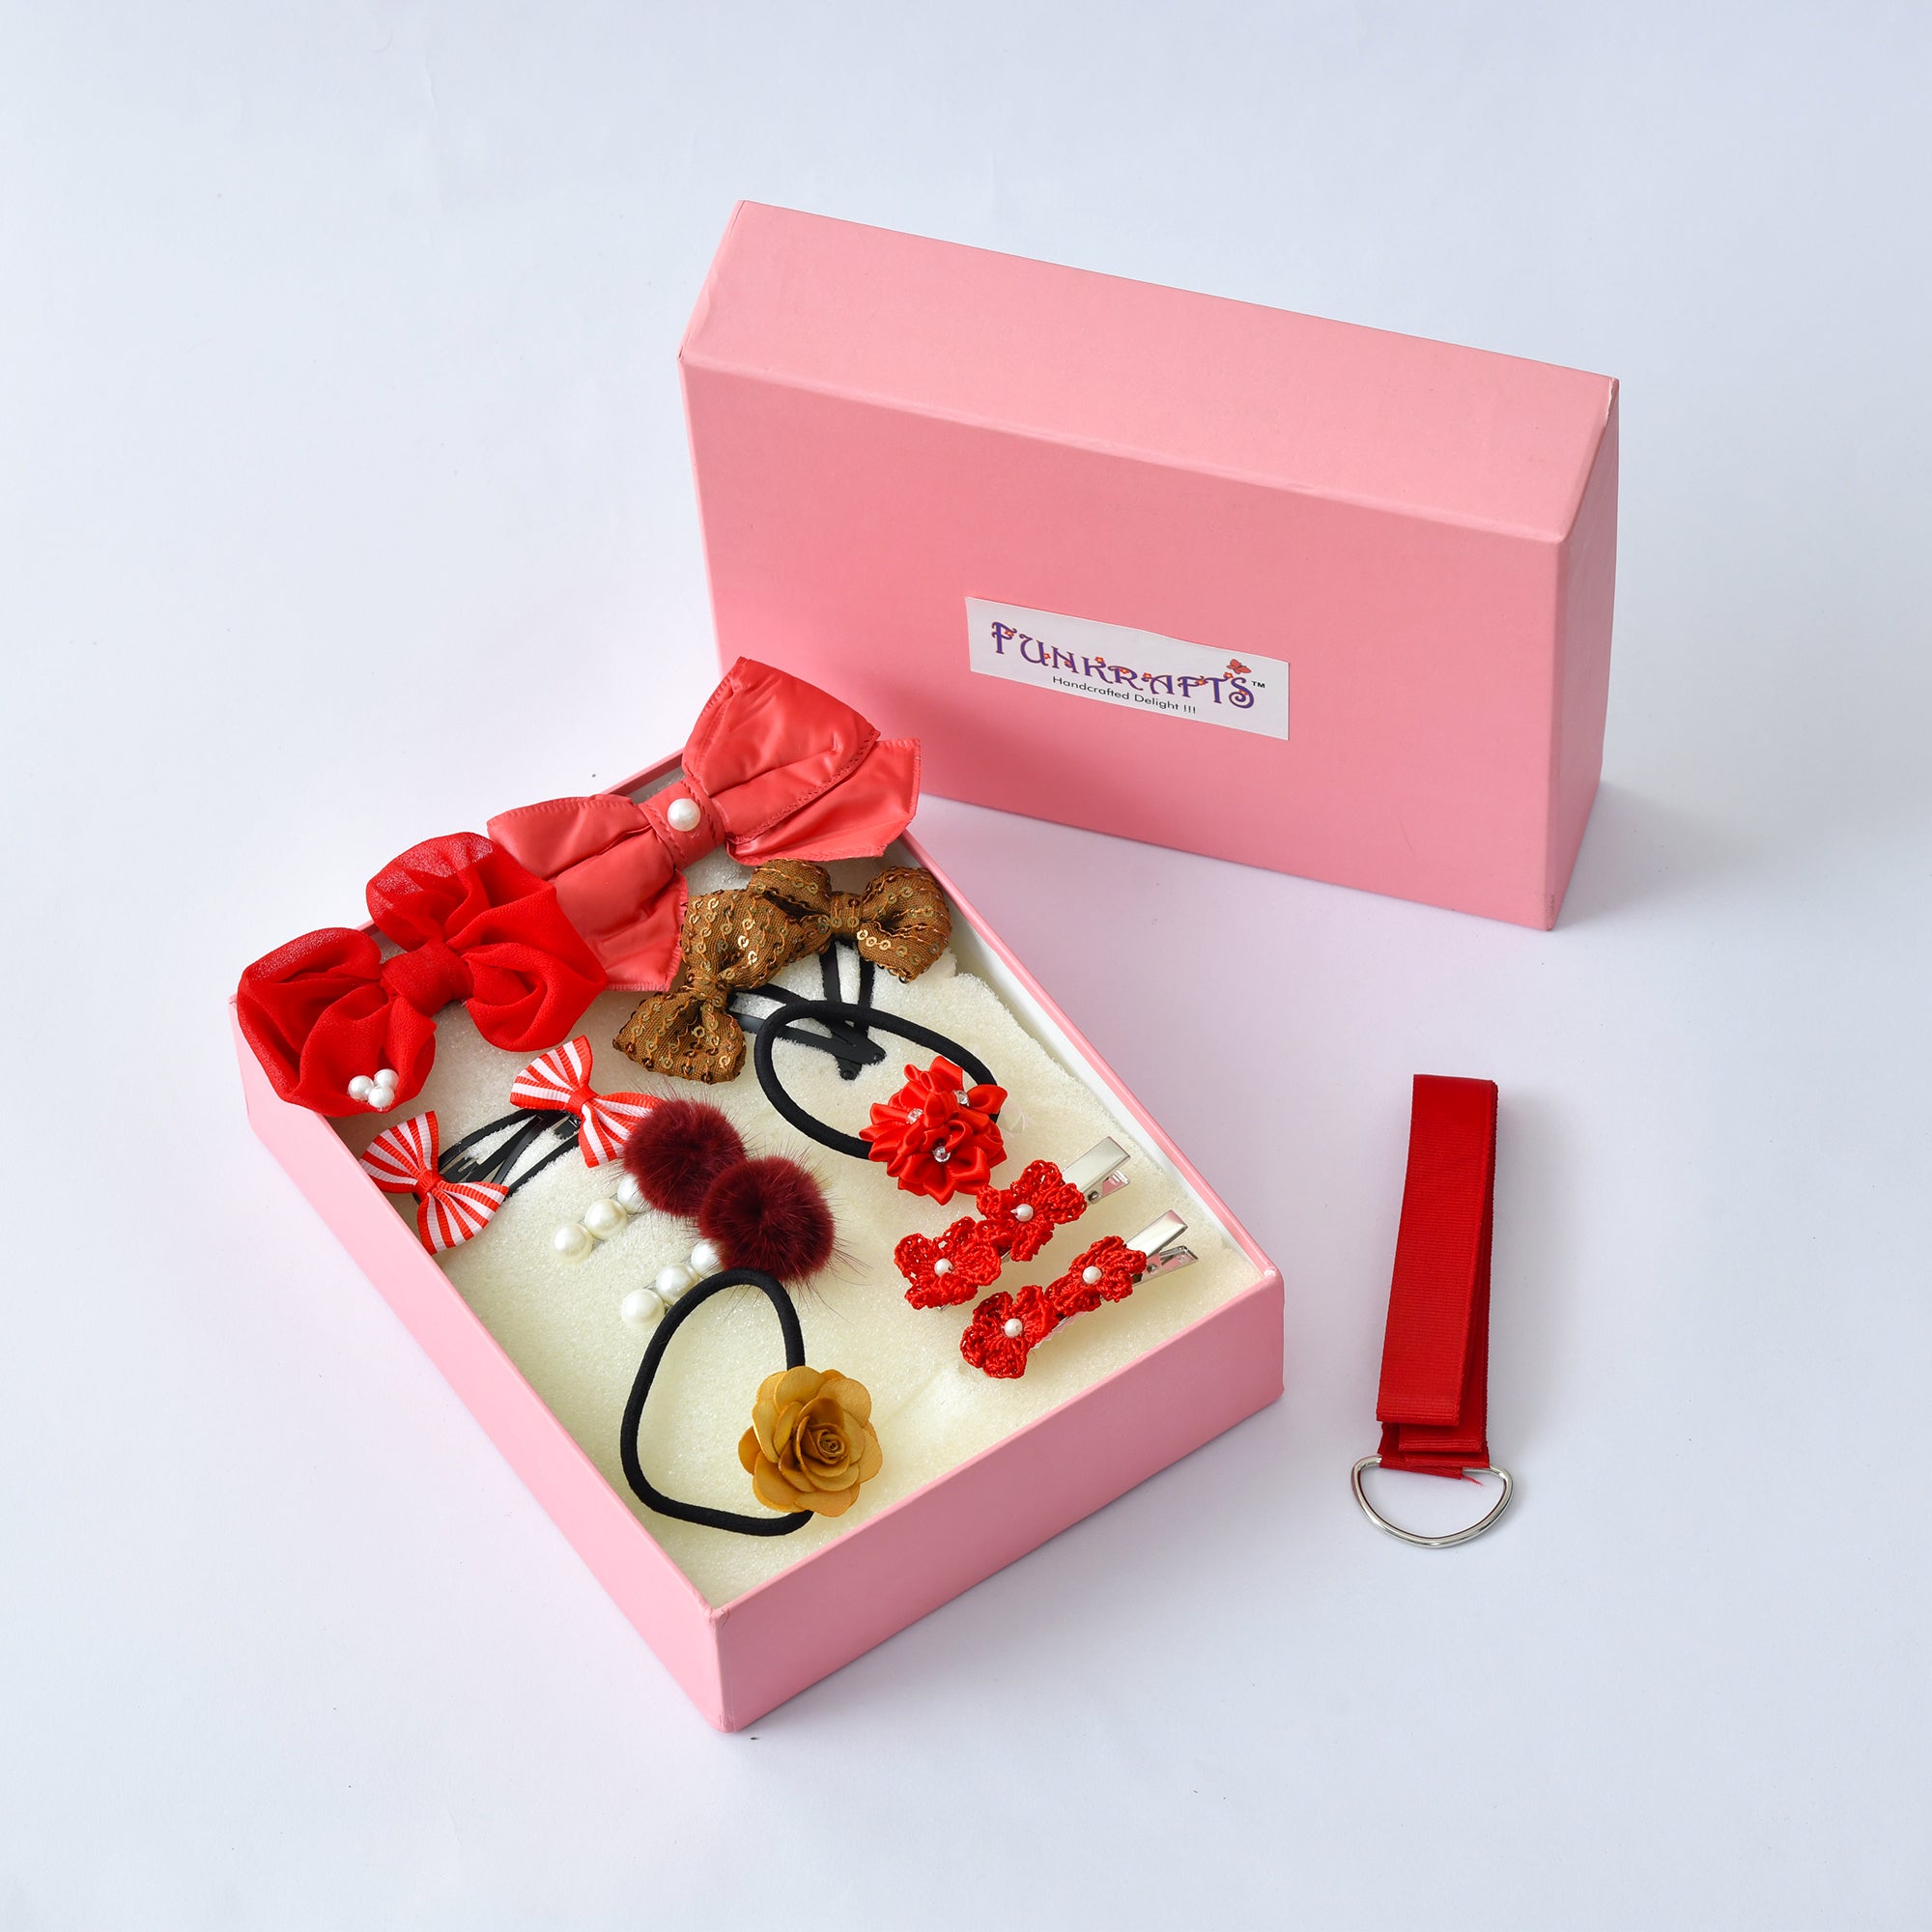 Red Rose Flowers Hair ClipsHair AccessoriesHair Pins for BdayGift2  Pack  Shetu Imitation Jewellery  Hair Accessories  4013451